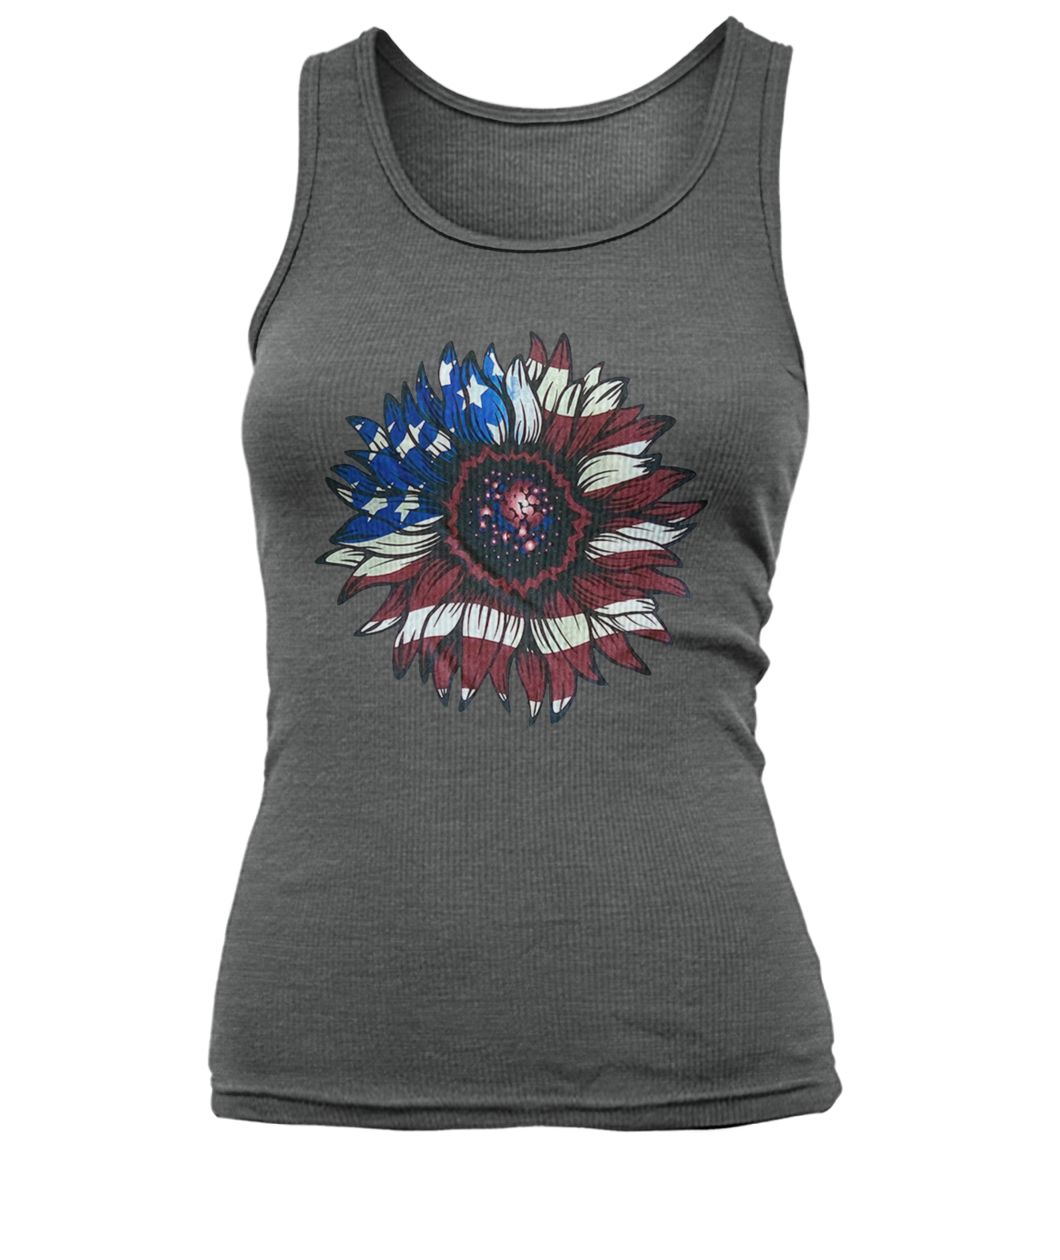 American flag sunflower women's tank top